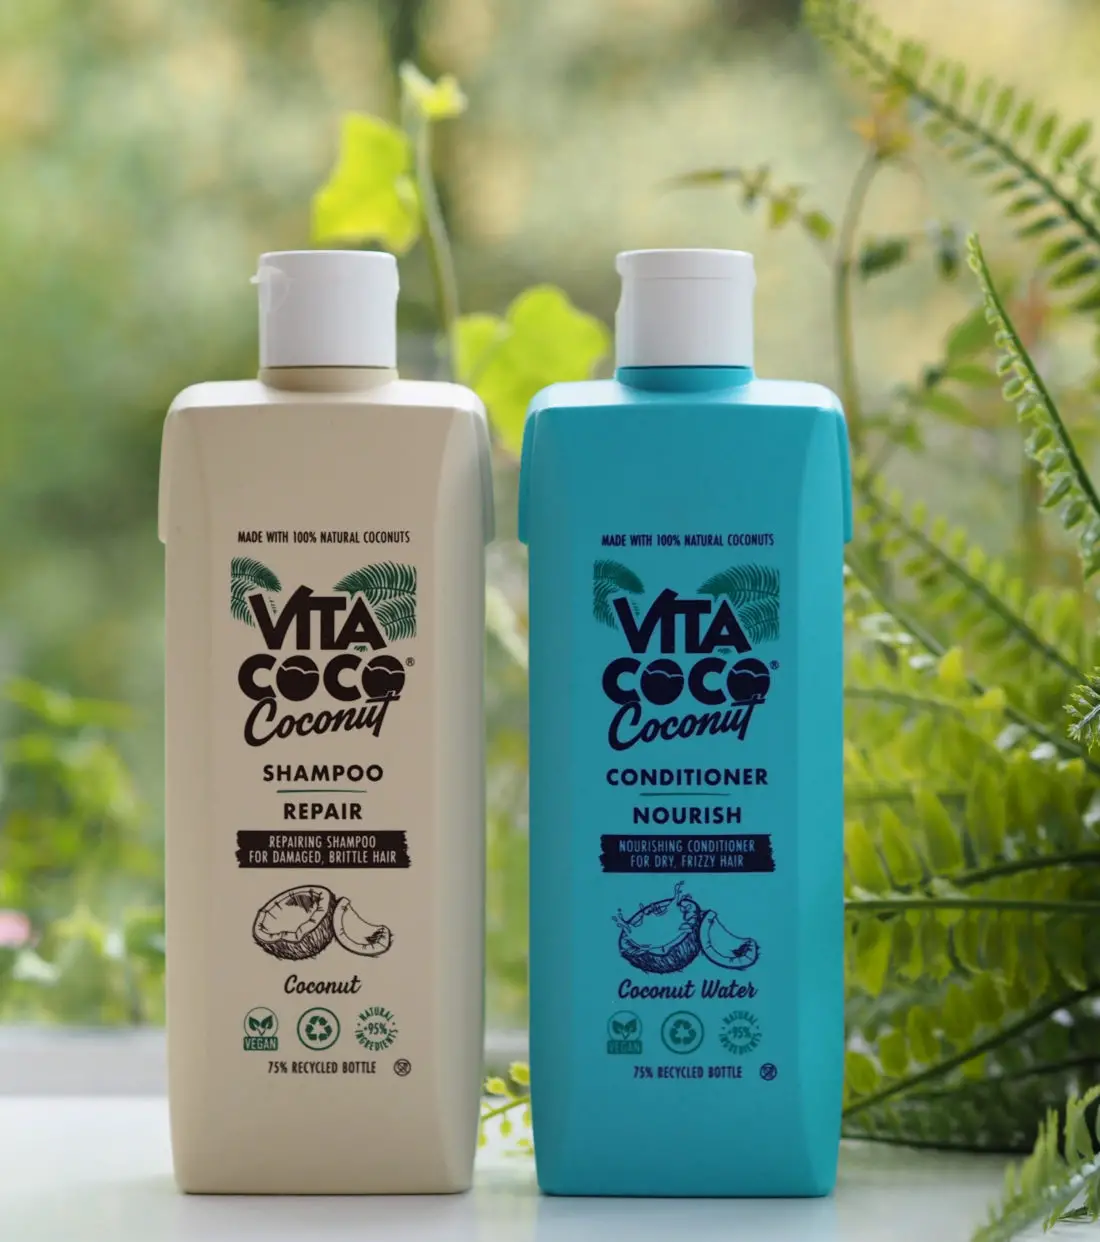 fragment Lake Taupo Bangladesh Vita Coco Coconut Shampoo & Conditioner | British Beauty Blogger